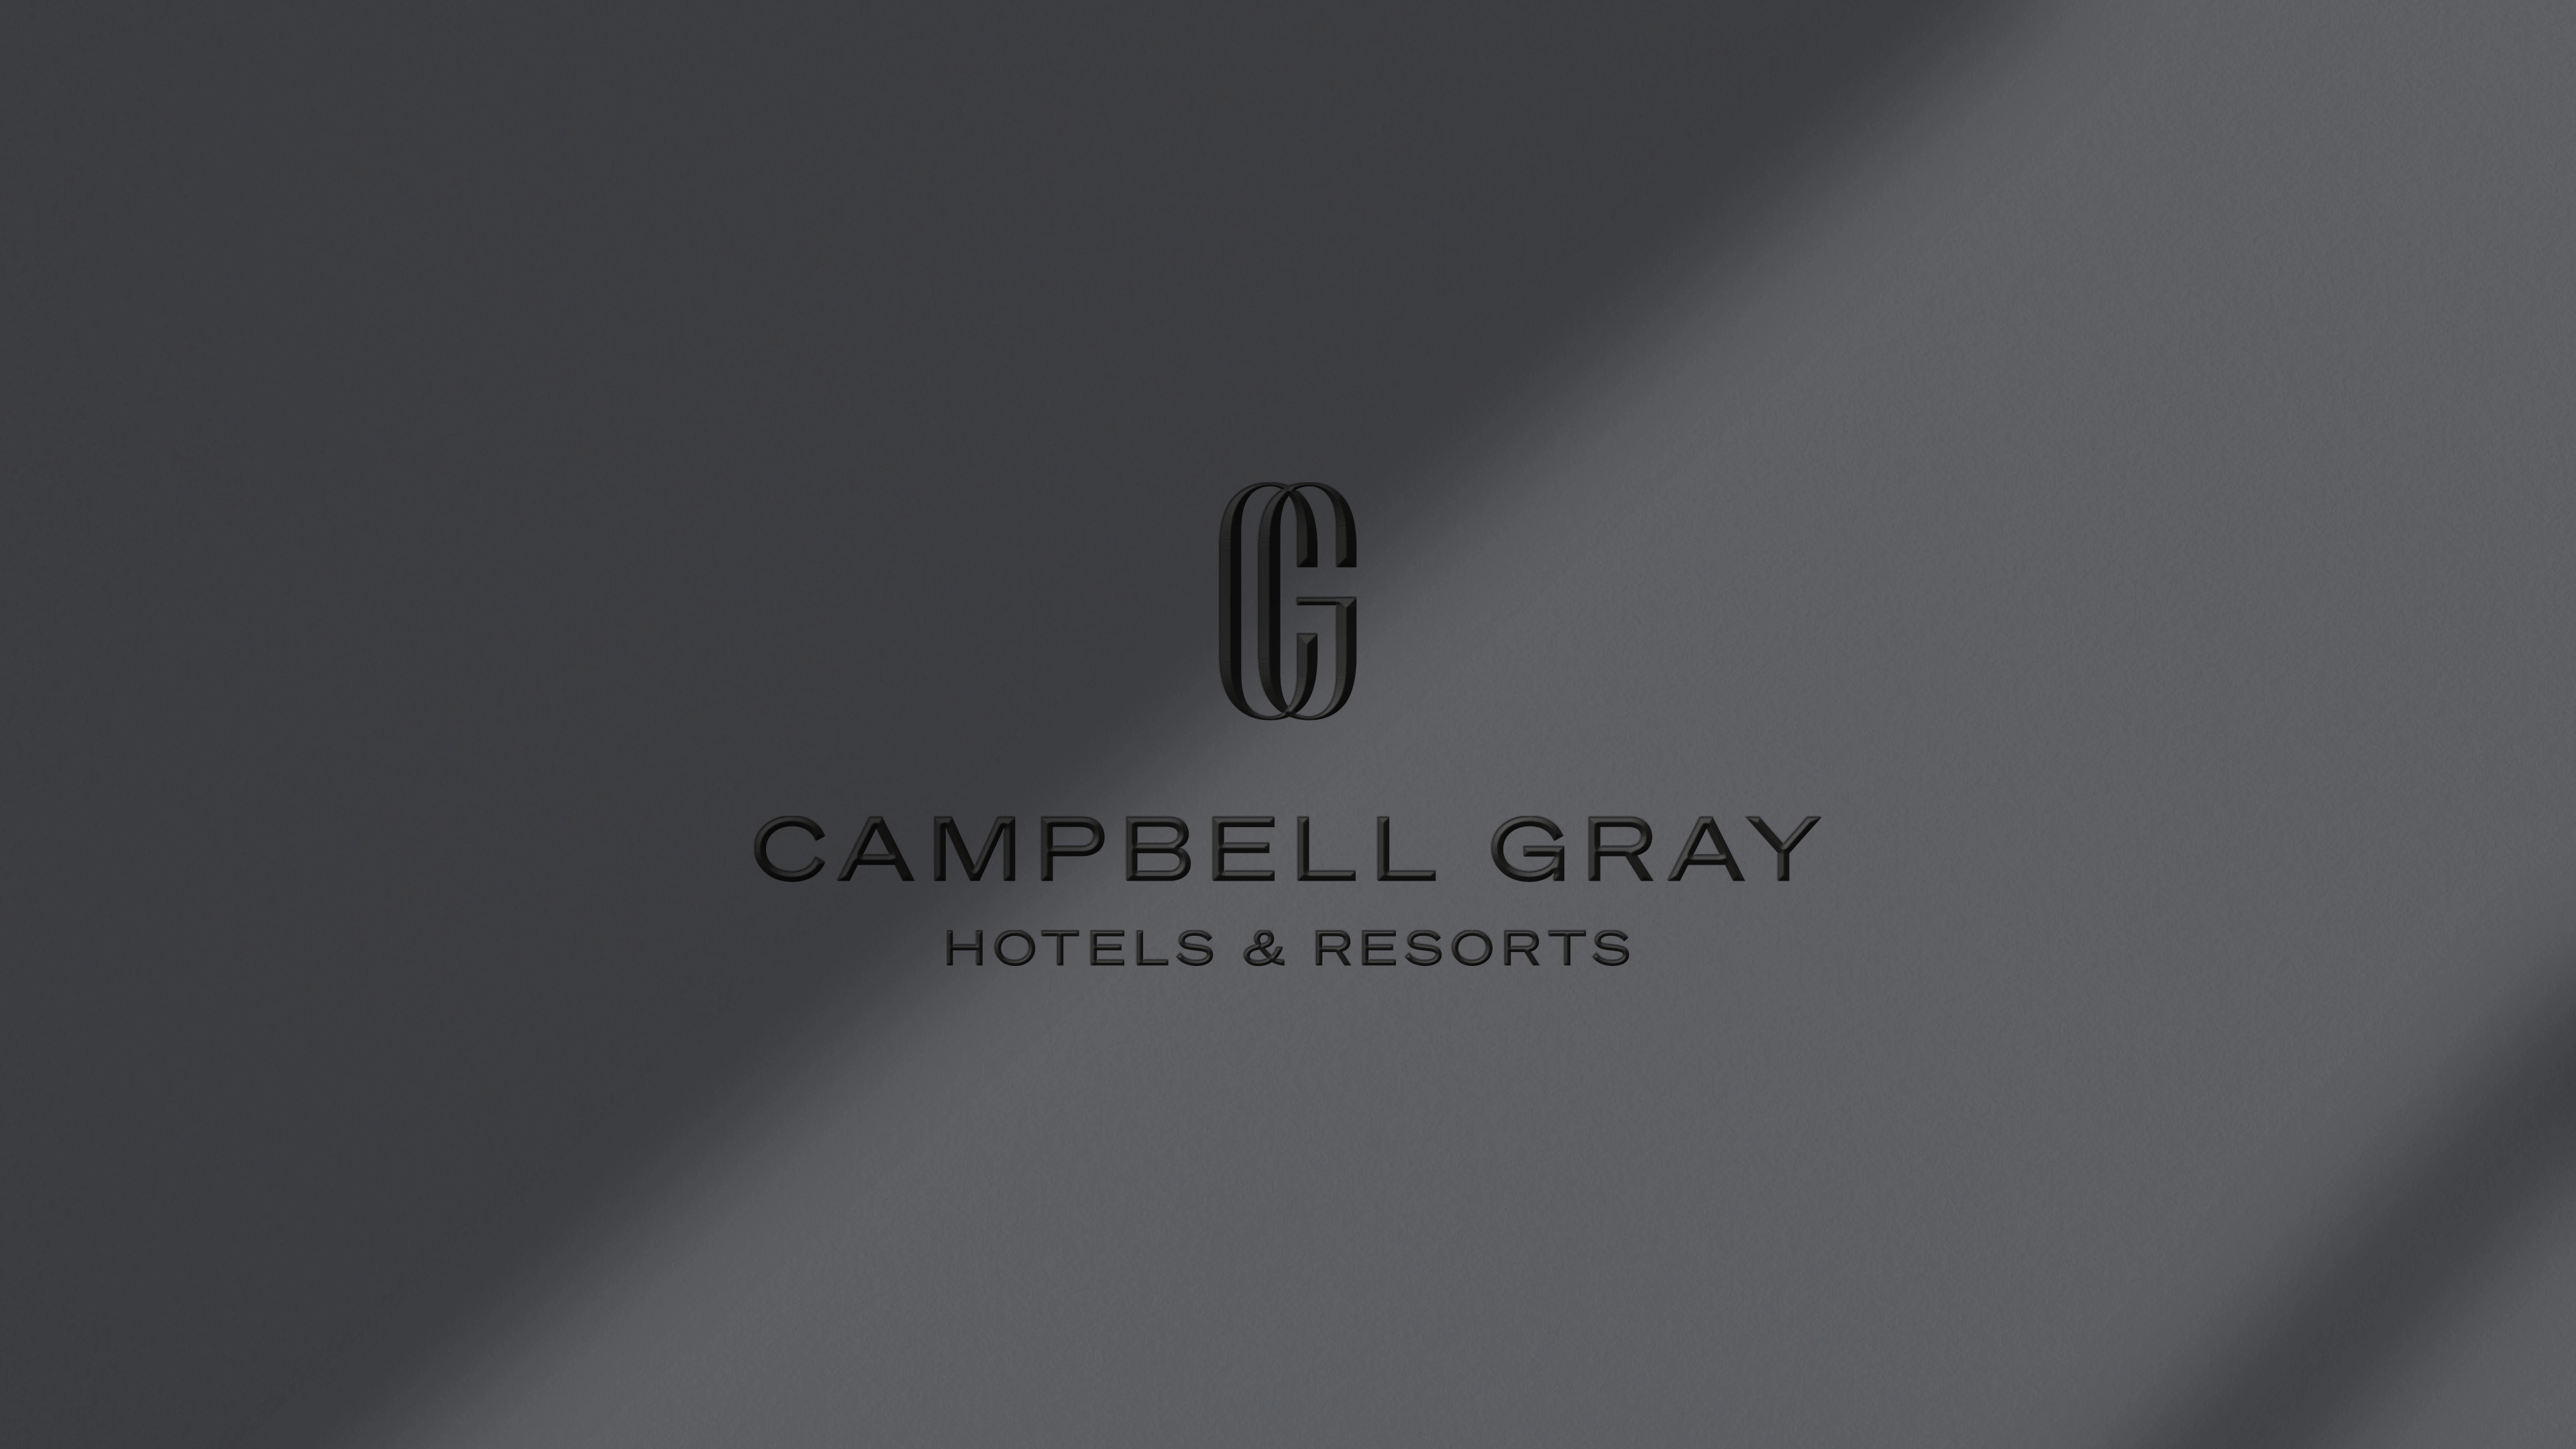 CAMPBELL GREY HOTELS & RESORTS